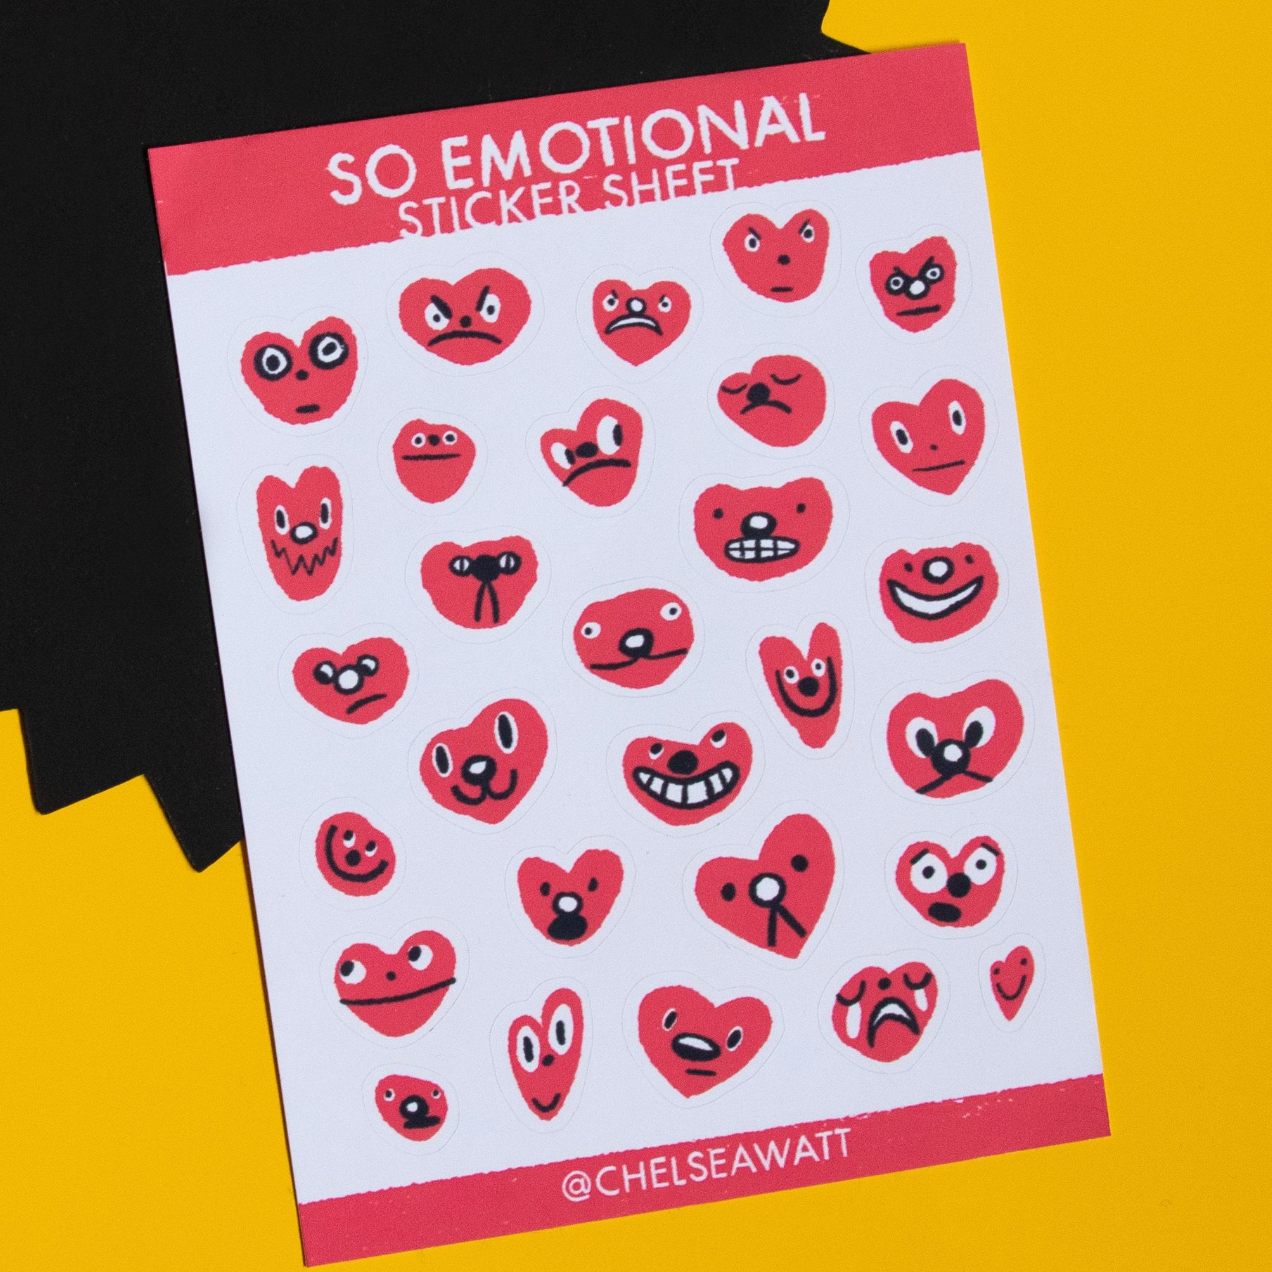 So Emotional Sticker Sheet